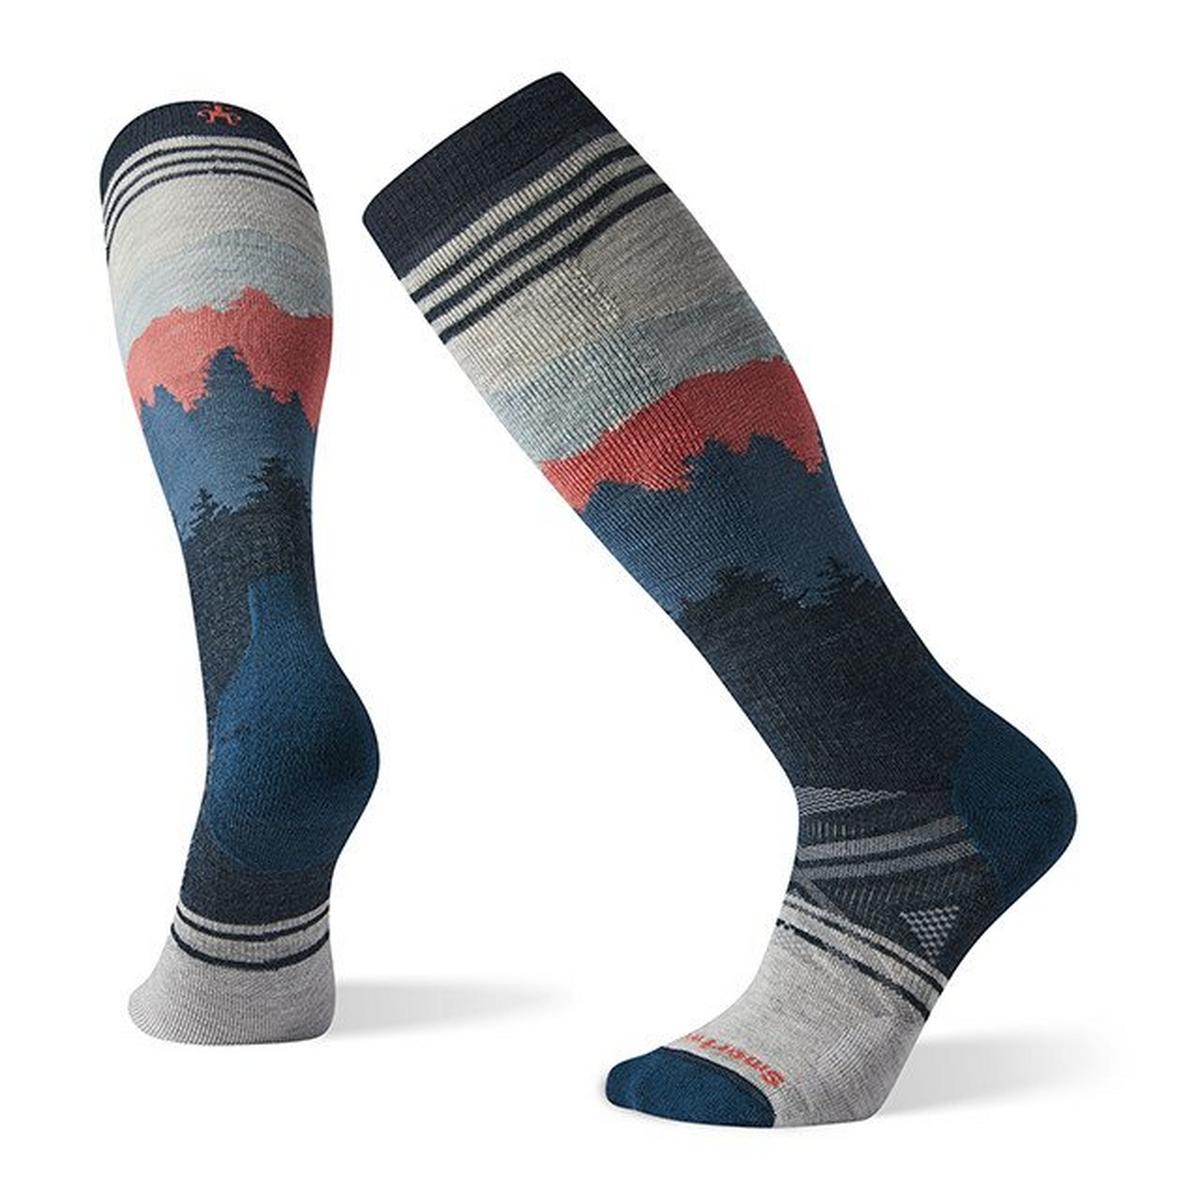 Smartwool Men's PhD Ski Medium Alpenglow Pattern Socks - Ash